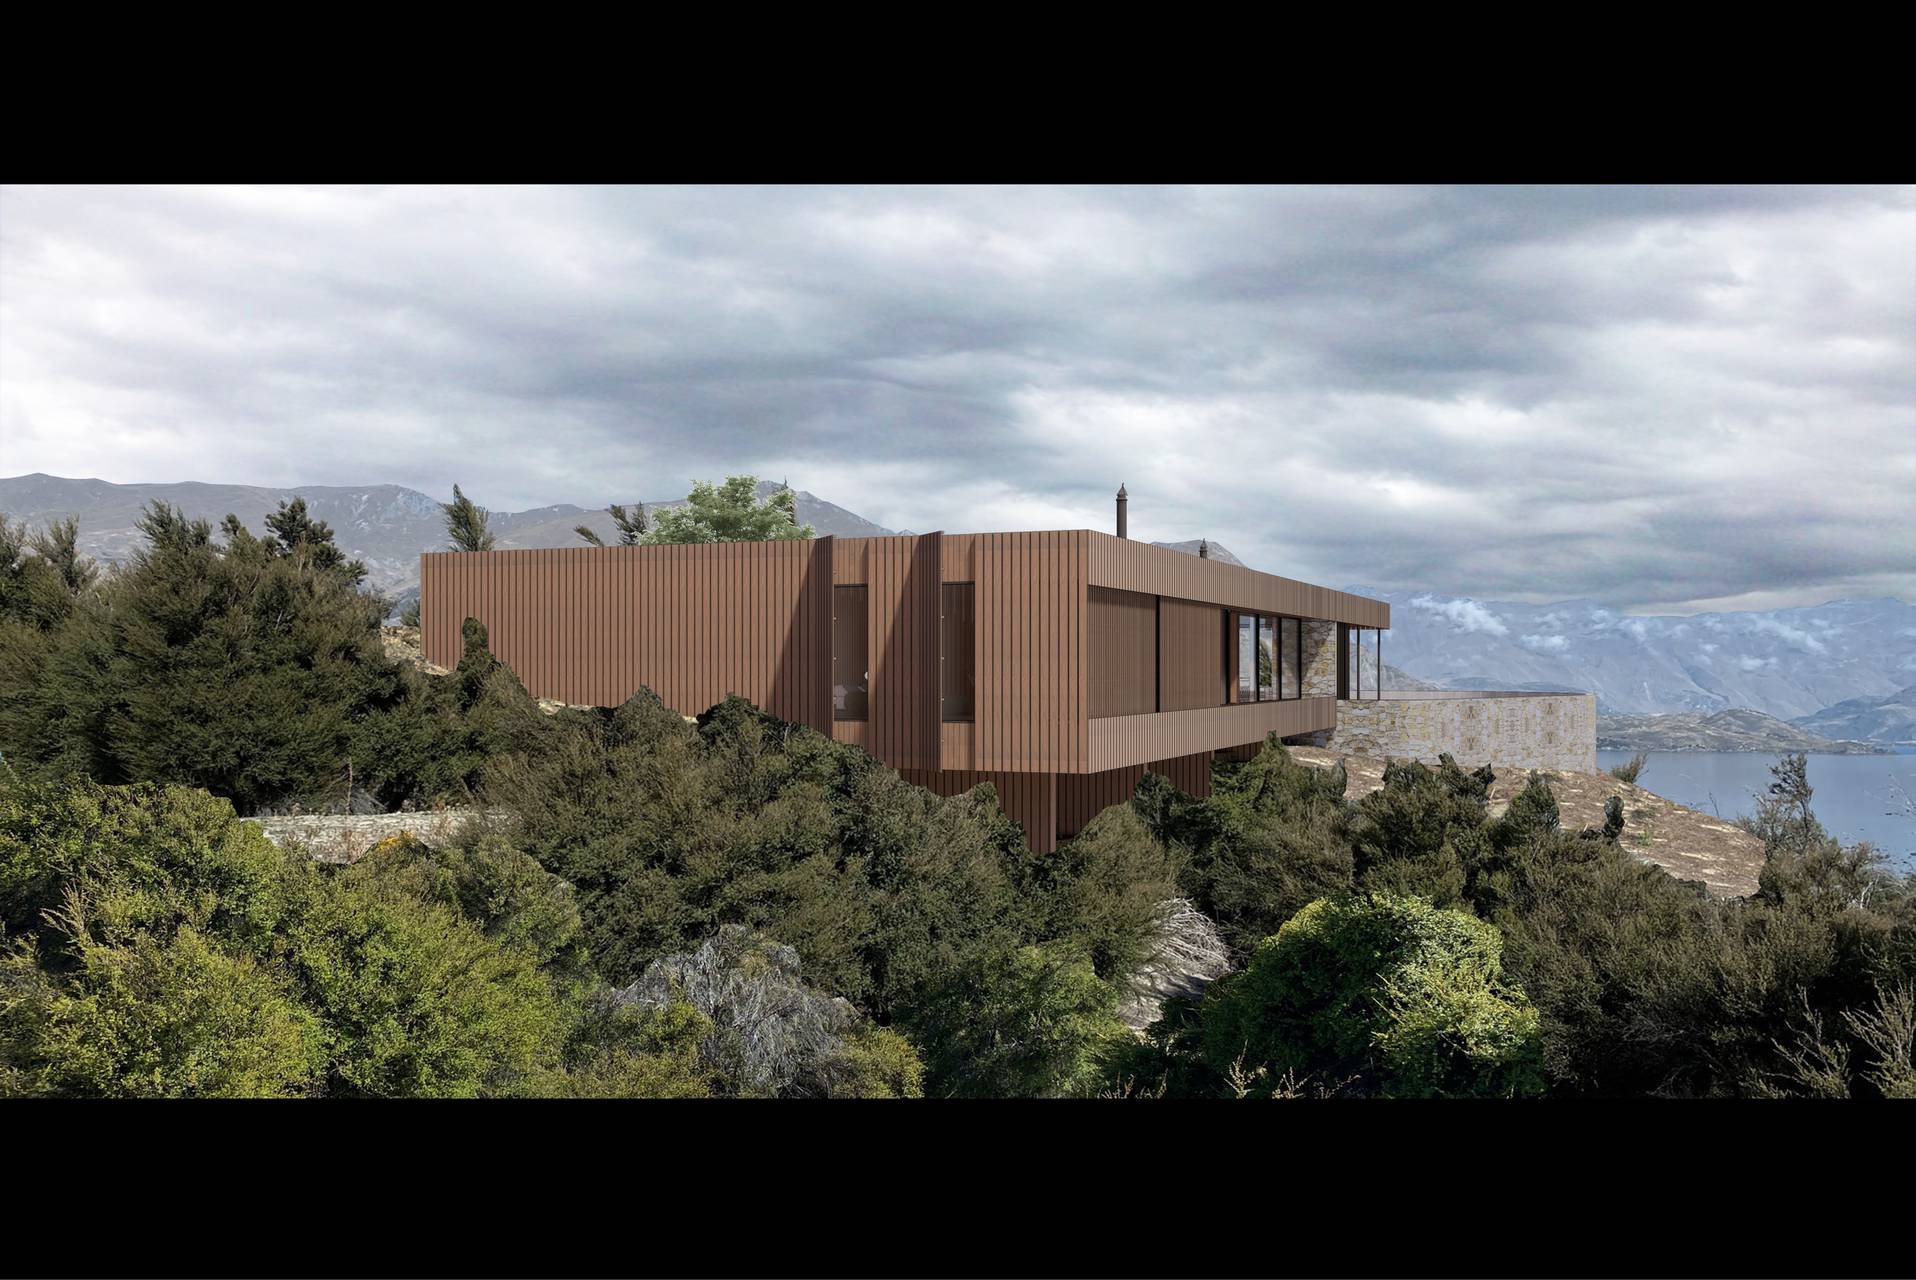 Wanaka Lake House by Herbst Architects